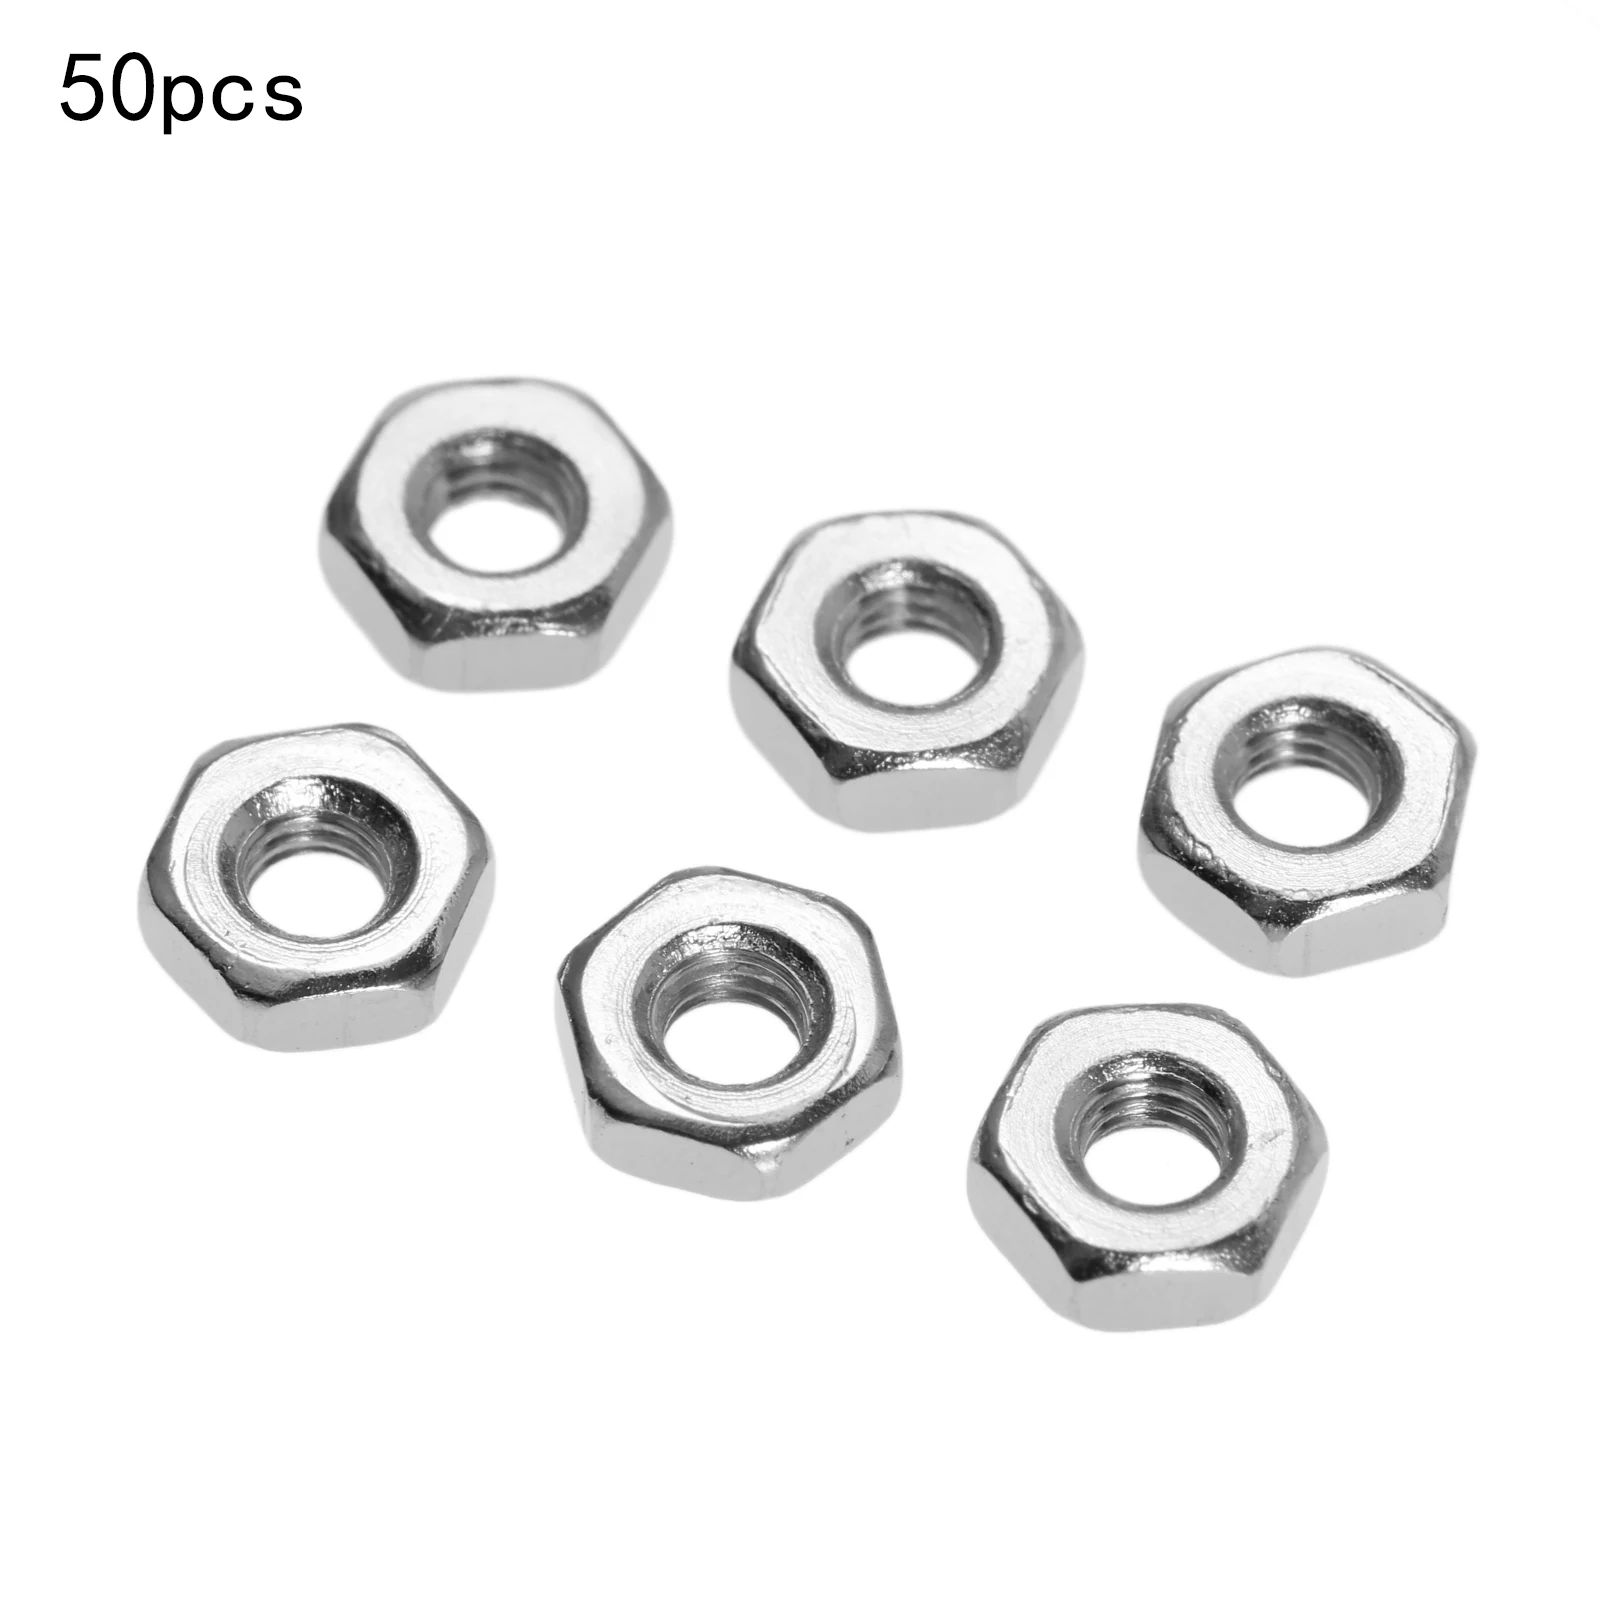 

50Pcs M2/M2.5/M3/M4/M5/M6 Carbon Steel Nuts Metric Thread Hex Nuts Silver Hexagon Nut For Screws Bolts Fasteners